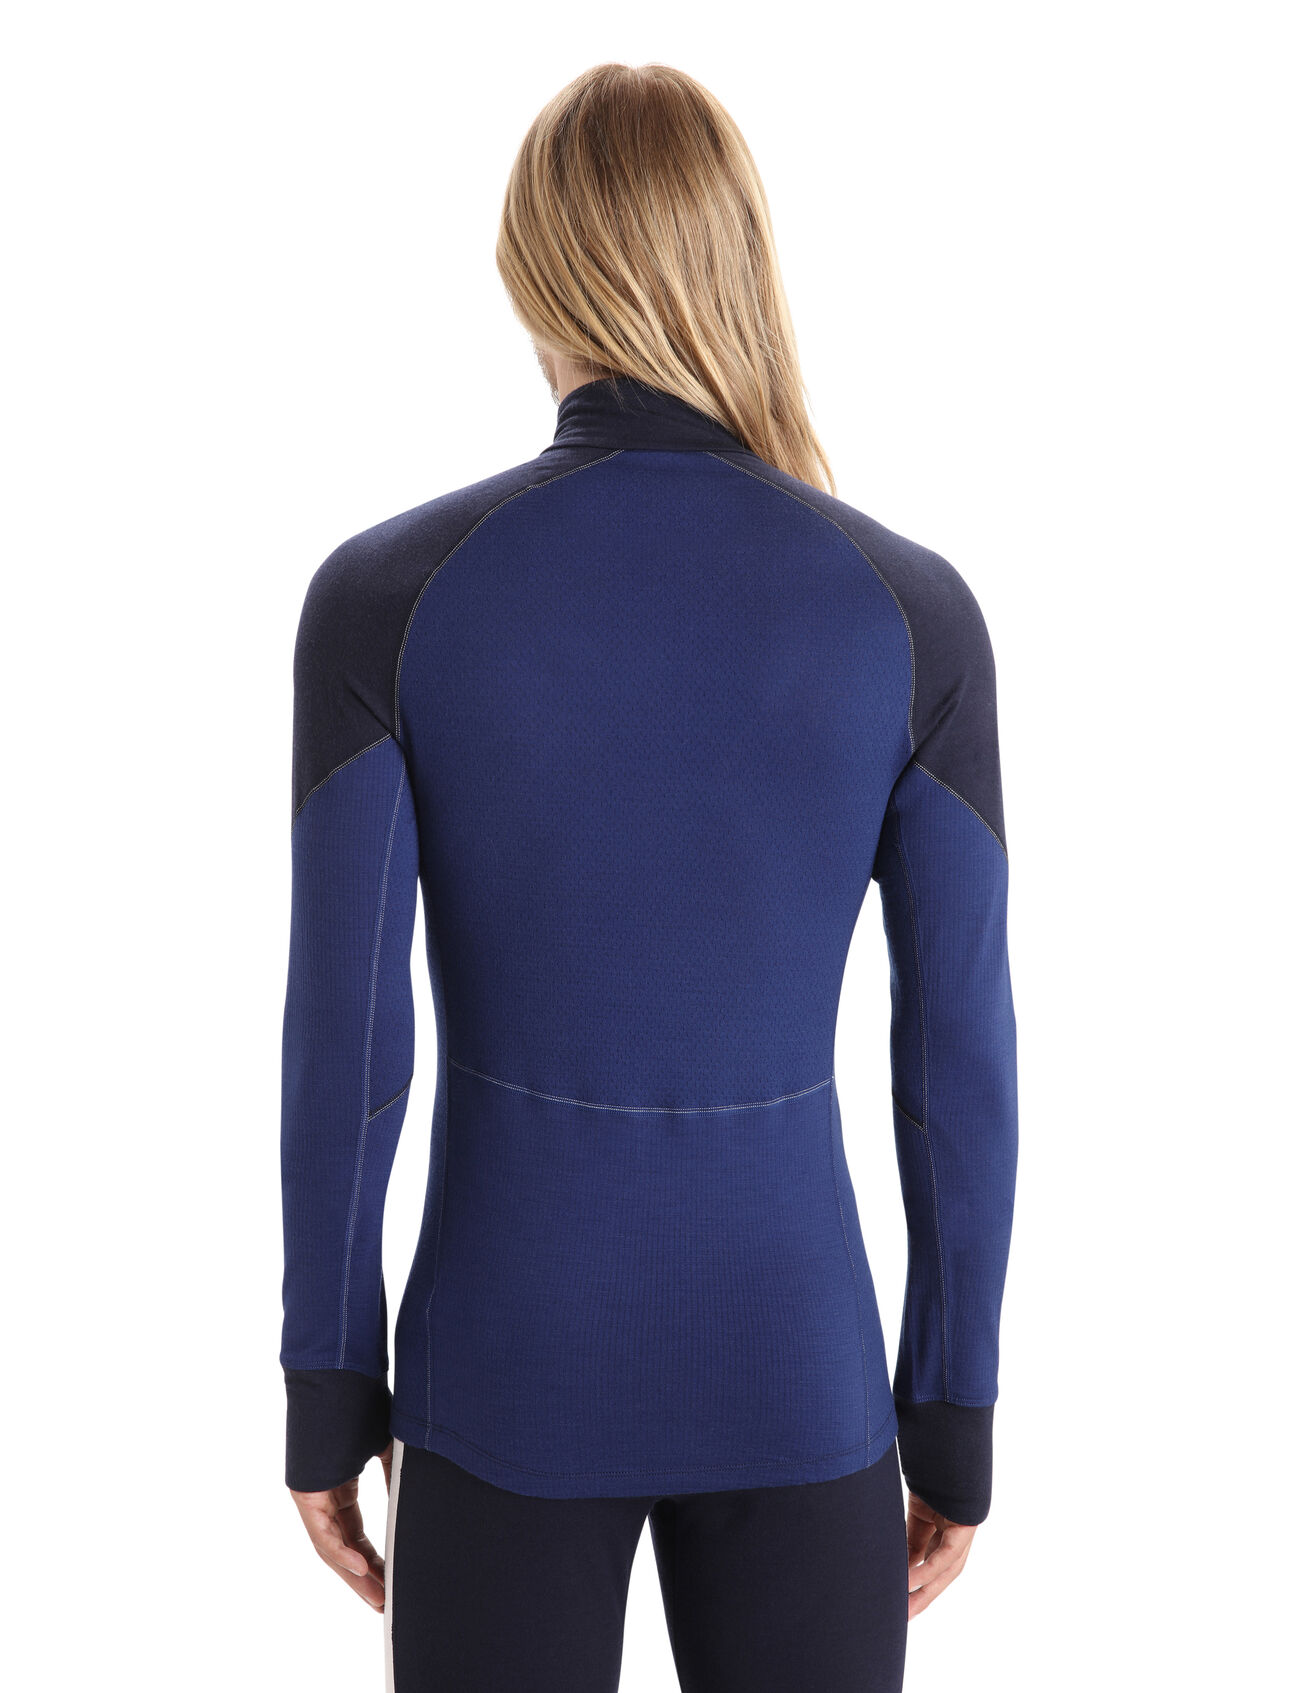 Women's BodyfitZone Merino 260 Zone Long Sleeve Half Zip Thermal Top -  Gearhead Outfitters